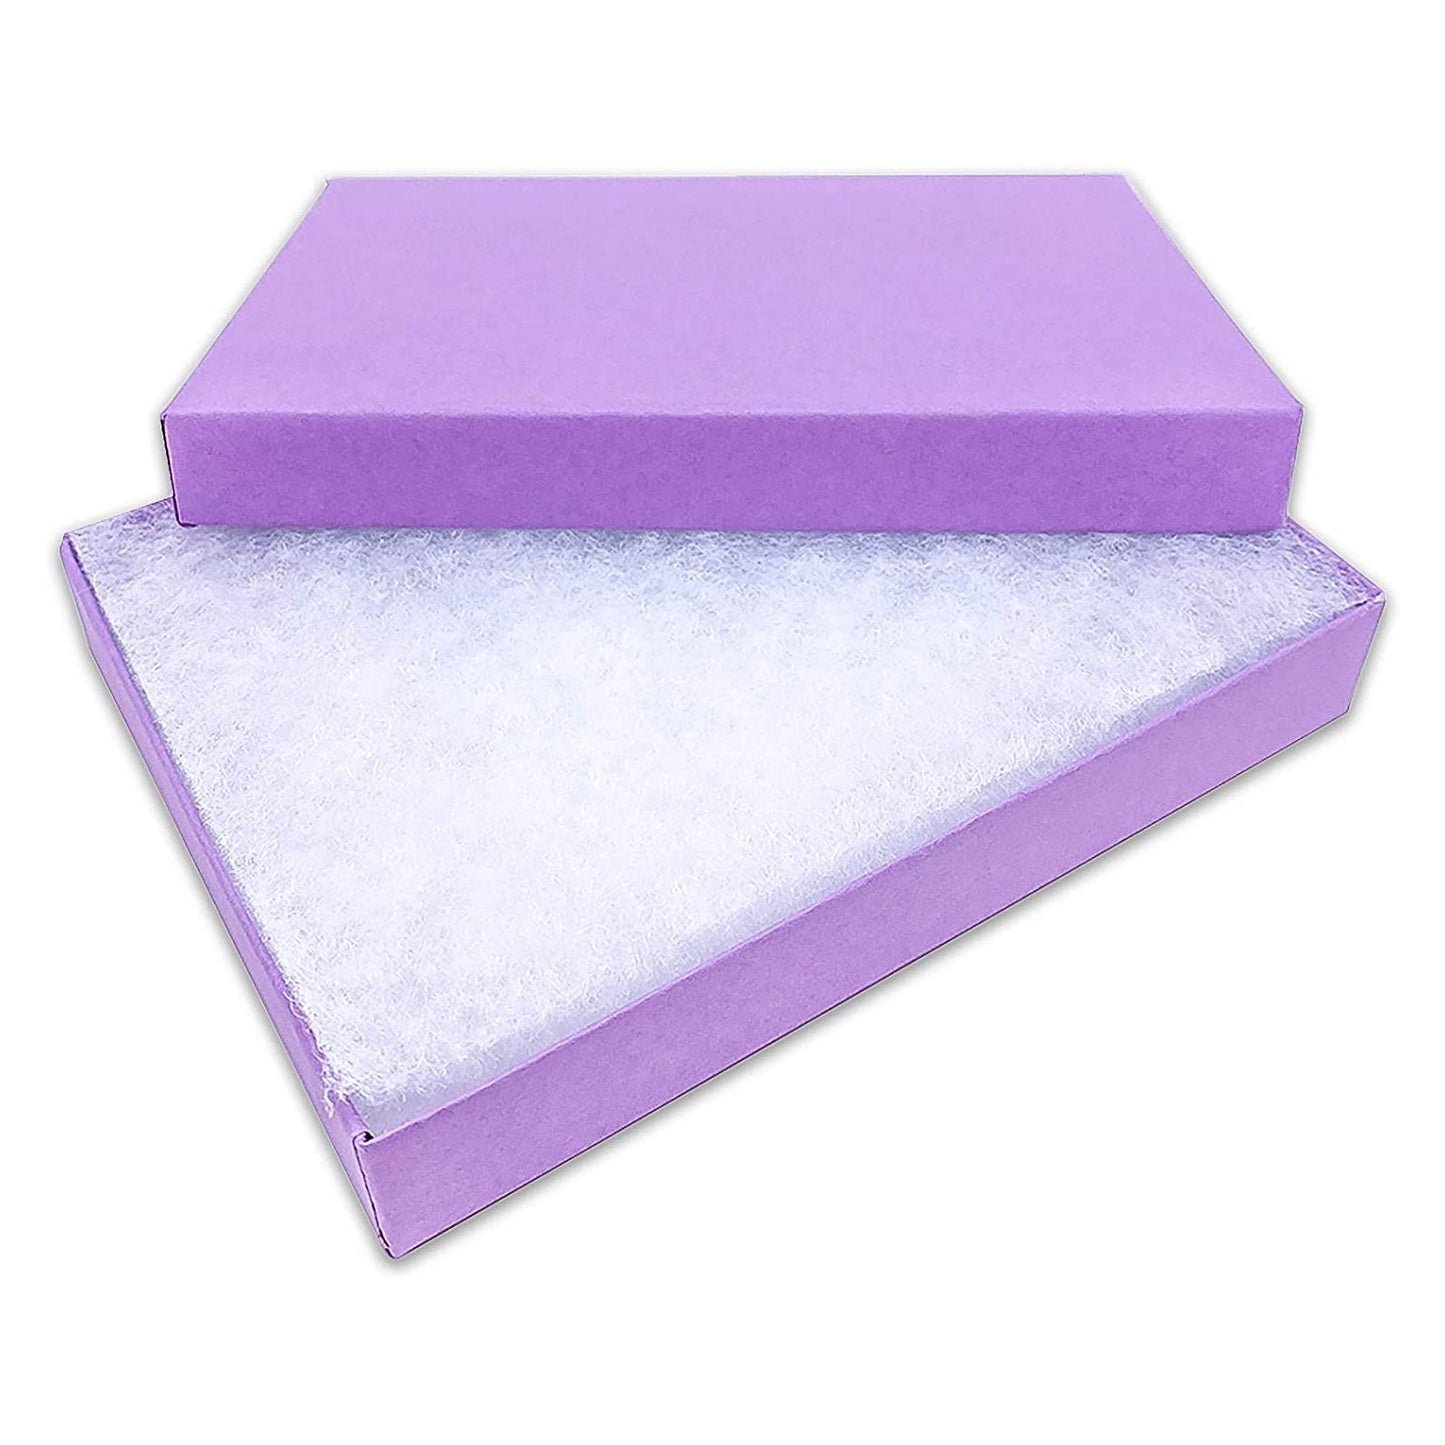 #65 - 6 1/8" x 5 1/8" x 1 1/8"H Matte Purple Cotton Filled Paper Box